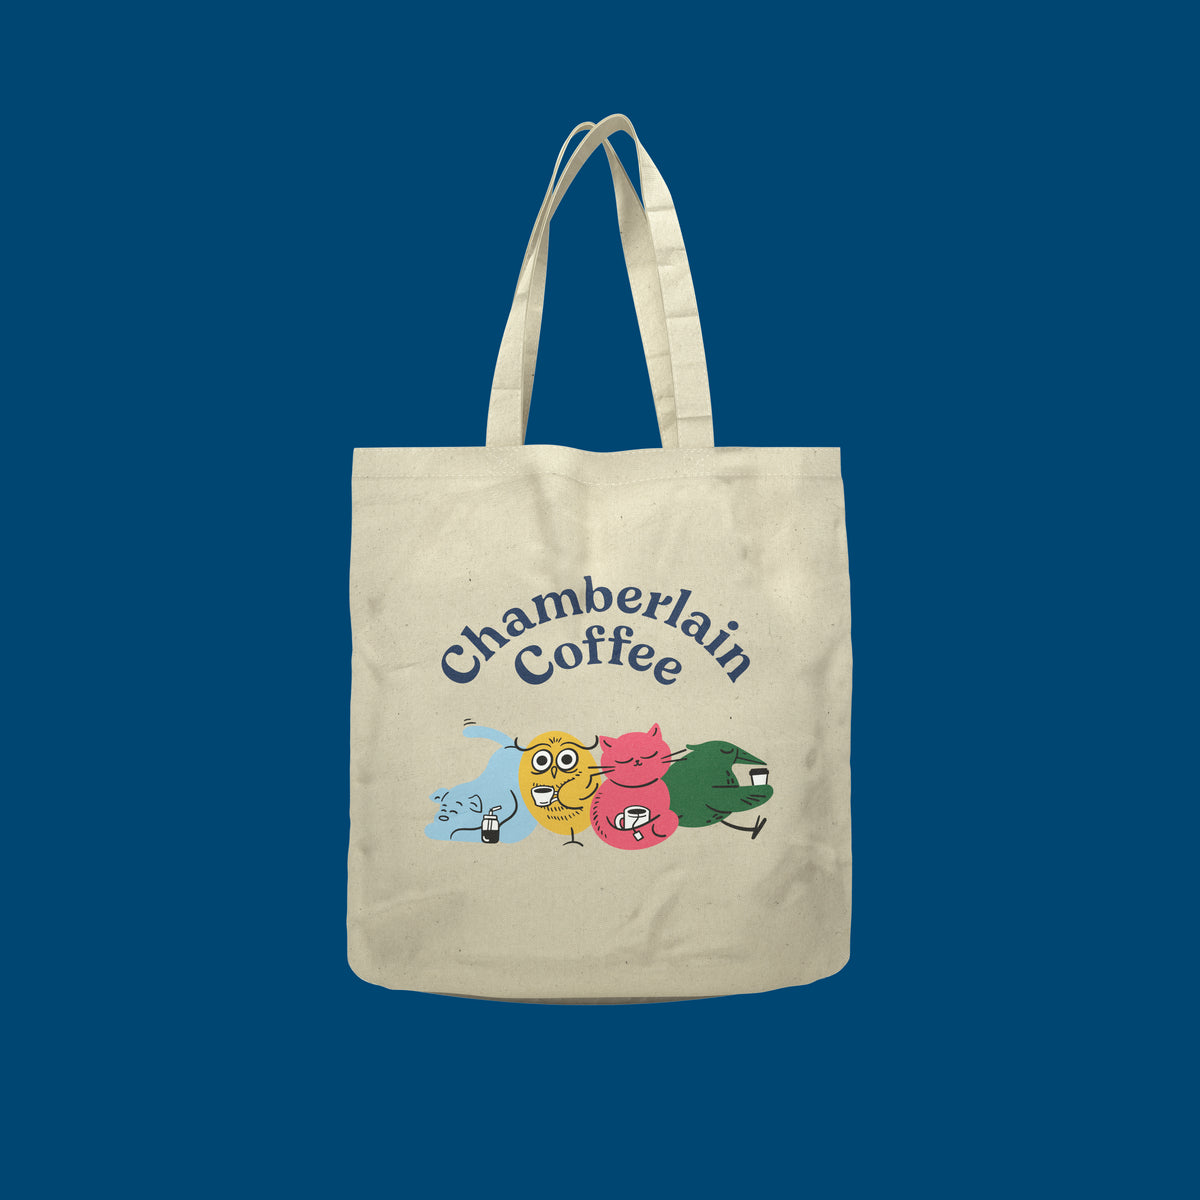 chamberlain coffee family tote bag